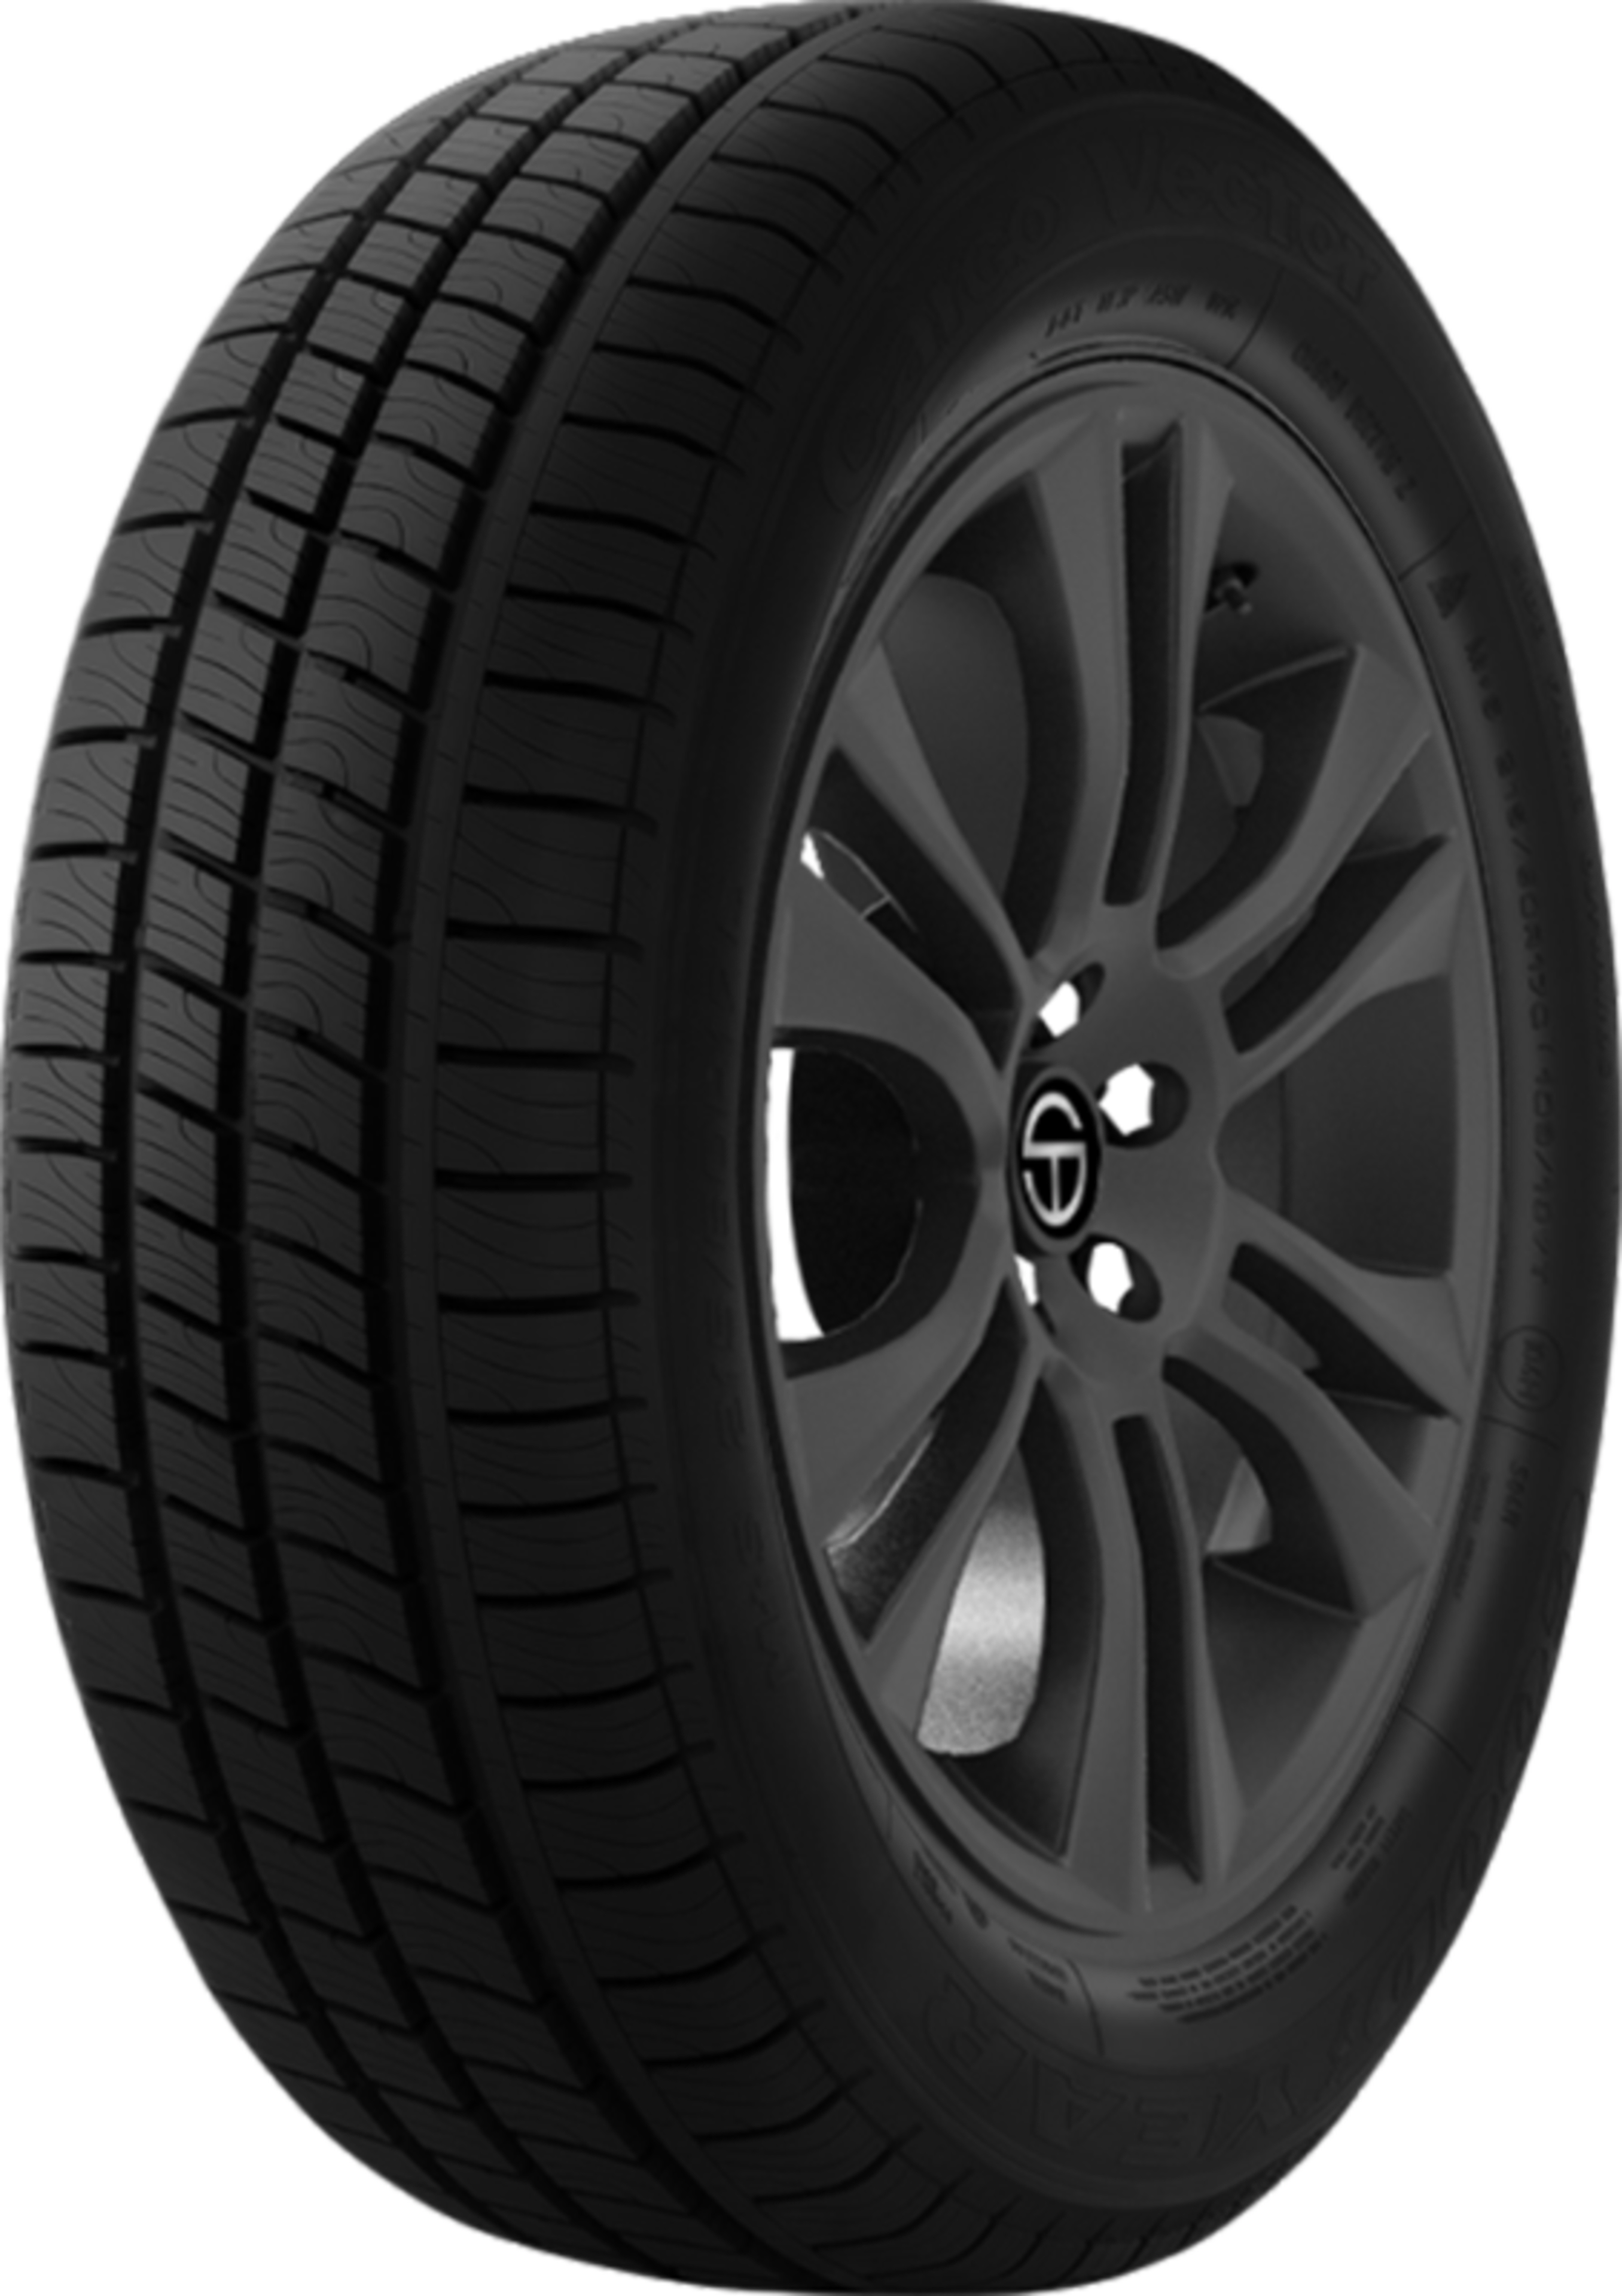 | Goodyear Online SimpleTire Tires Vector Buy 2 Cargo